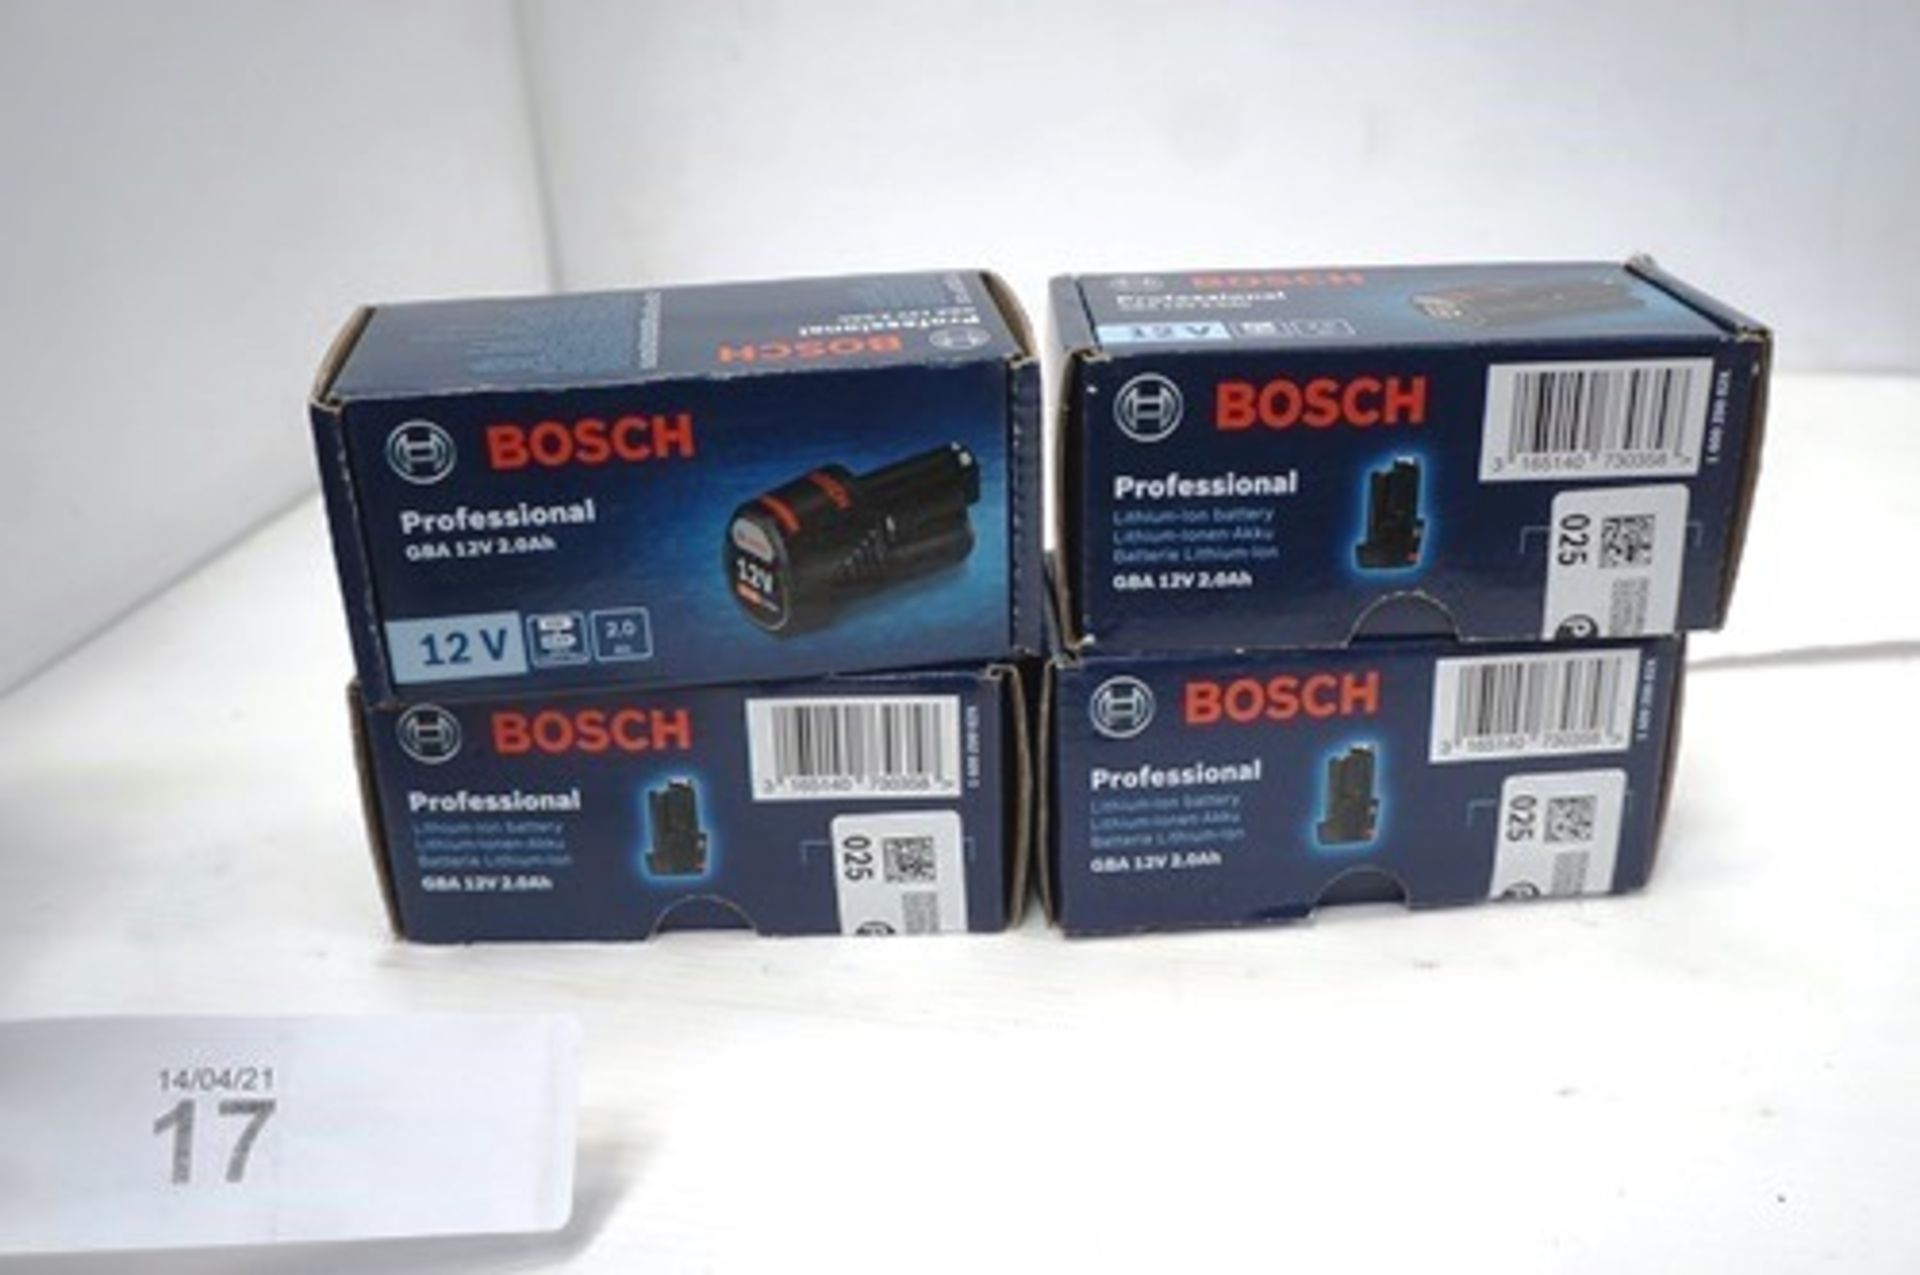 4 x Bosch GBA 12V 2.0Ah batteries, model 1600Z0002X, RRP £29.00 each - Sealed new in box (TC3)